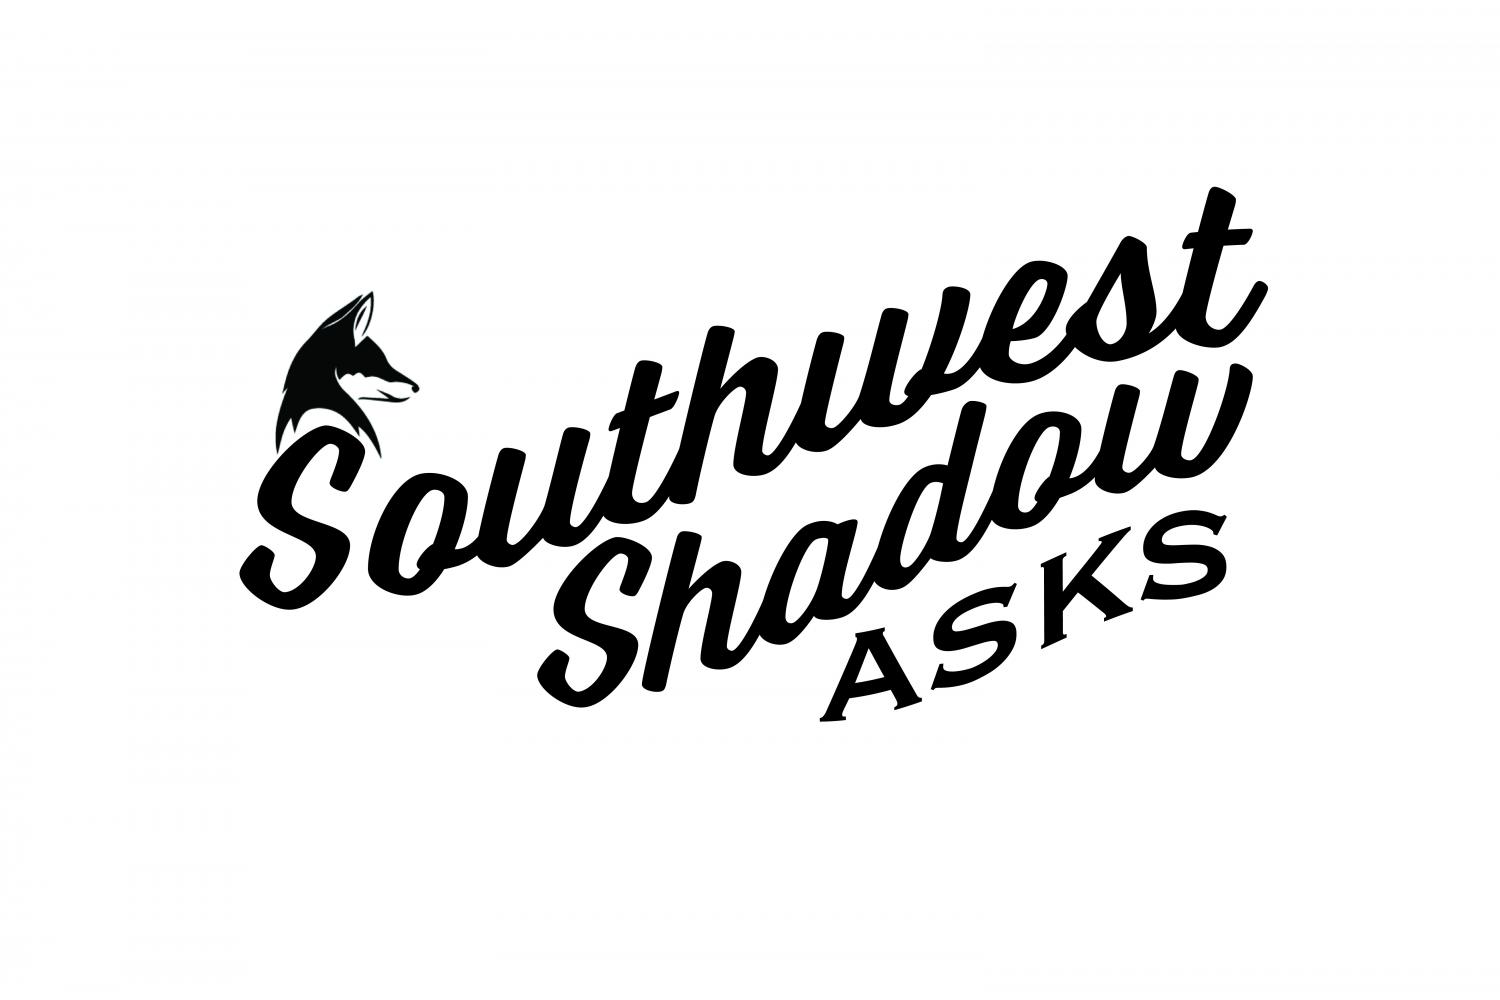 Southwest Shadow Asks: Carl Reiner